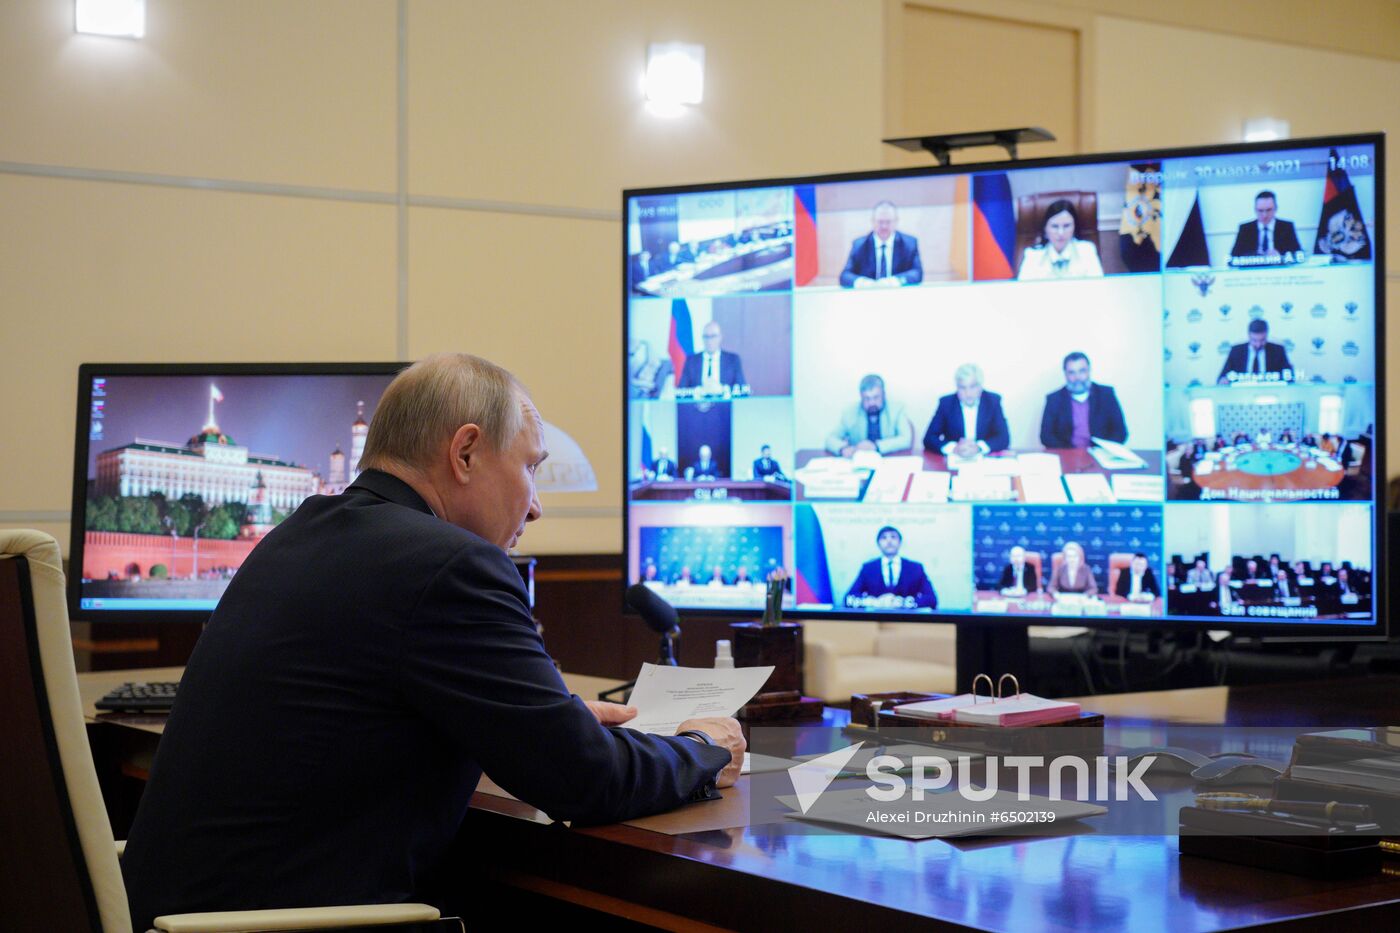 Russia Putin Interethnic Relations Council